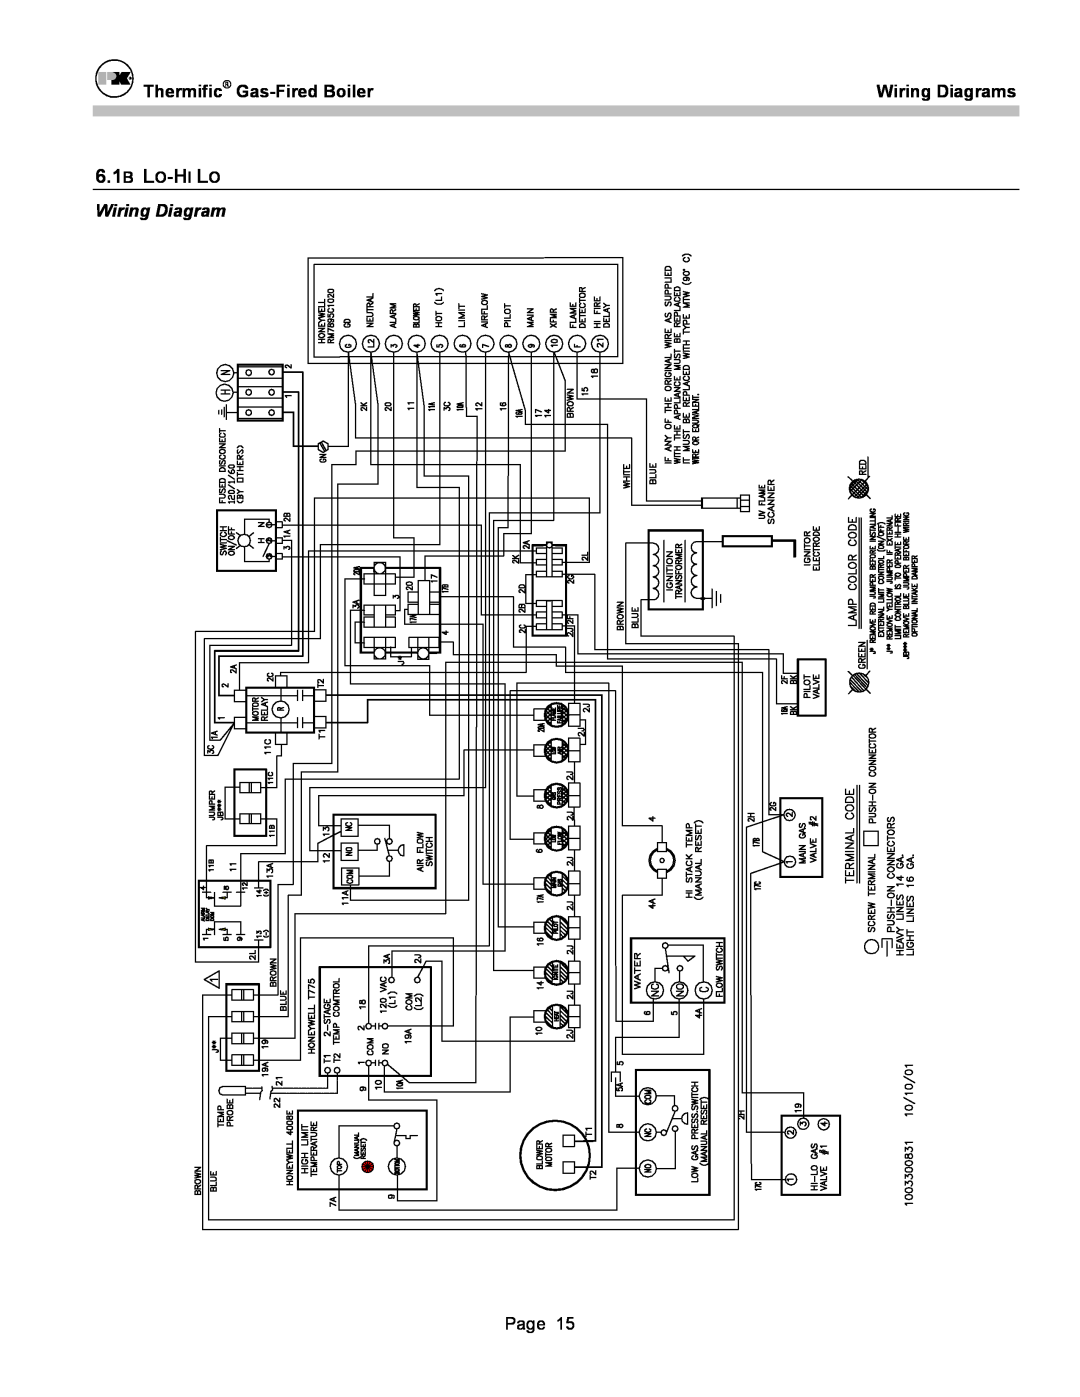 Patterson-Kelley DVSCM-02 owner manual 6.1B LO-HI LO, Thermific Gas-FiredBoiler, Wiring Diagrams 